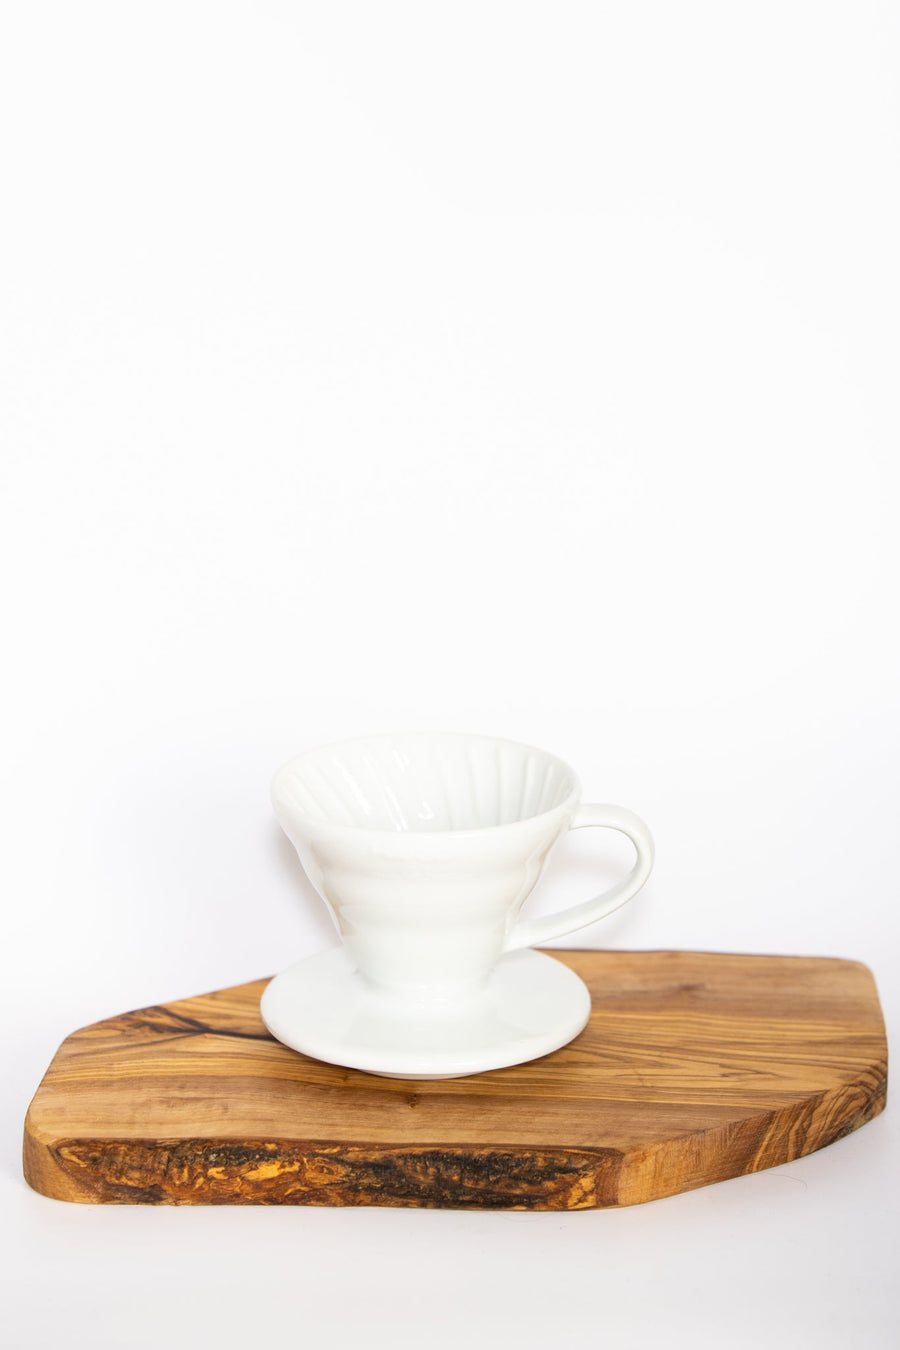 Hario V60 Ceramic Coffee Dripper, 01 - White - Be Good Coffee Co.